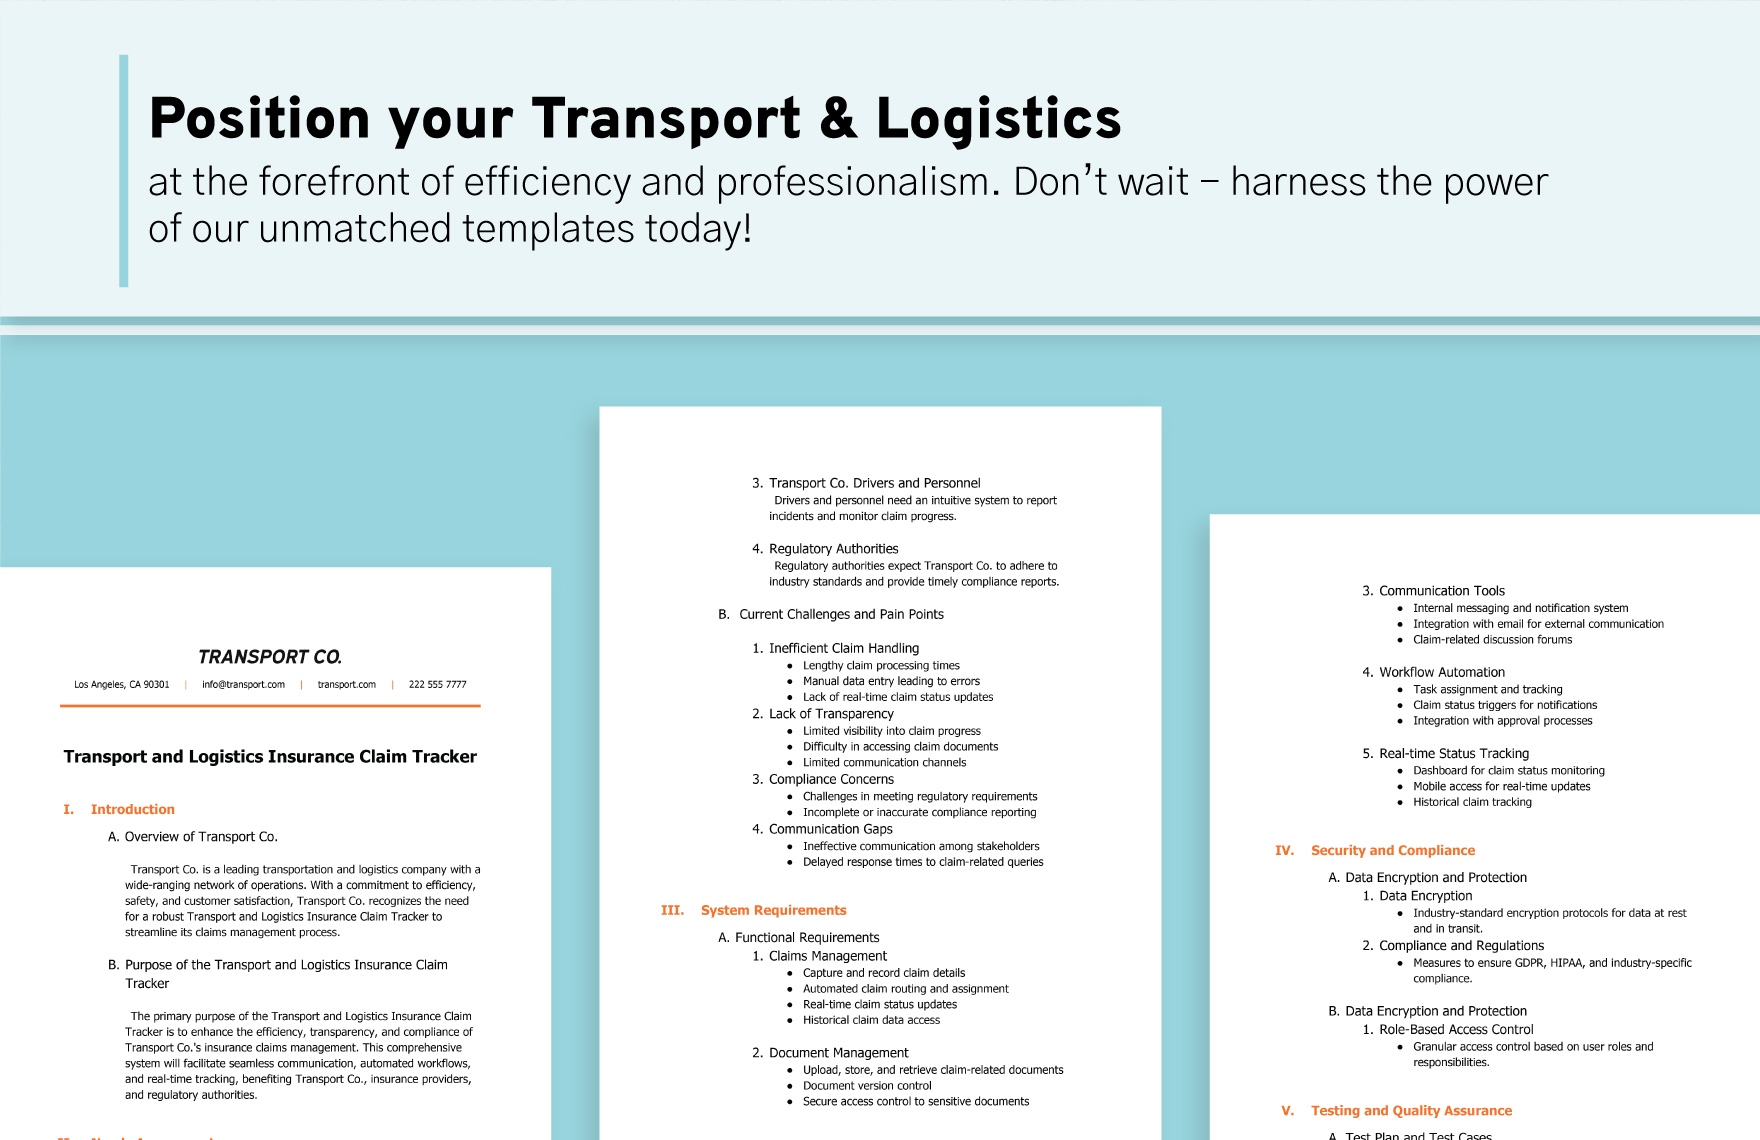 Transport and Logistics Insurance Claim Tracker Template